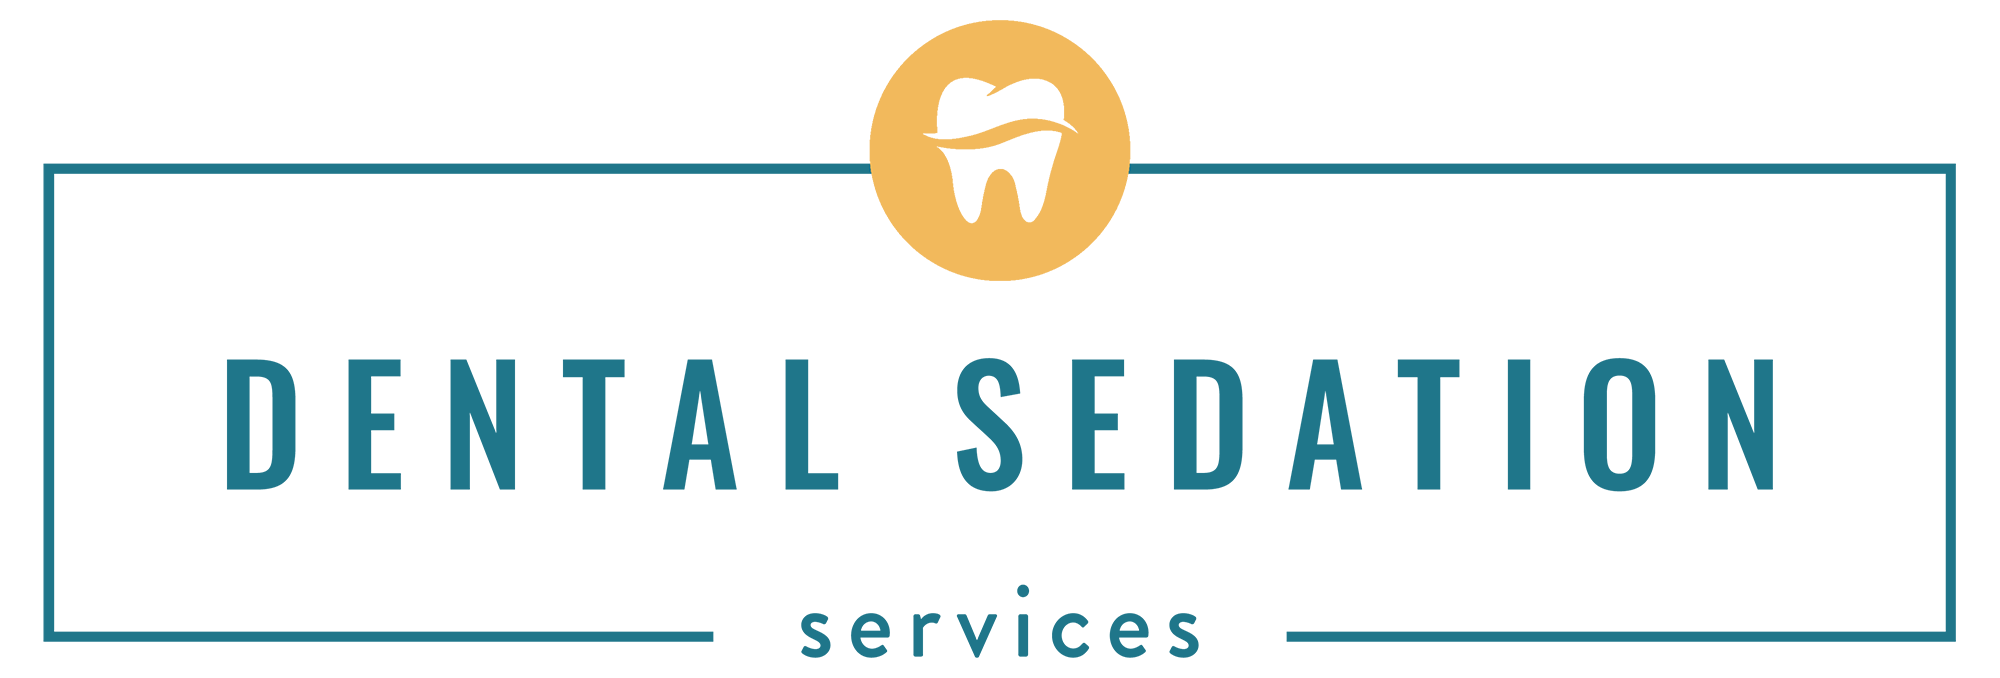 Dental Sedation Services